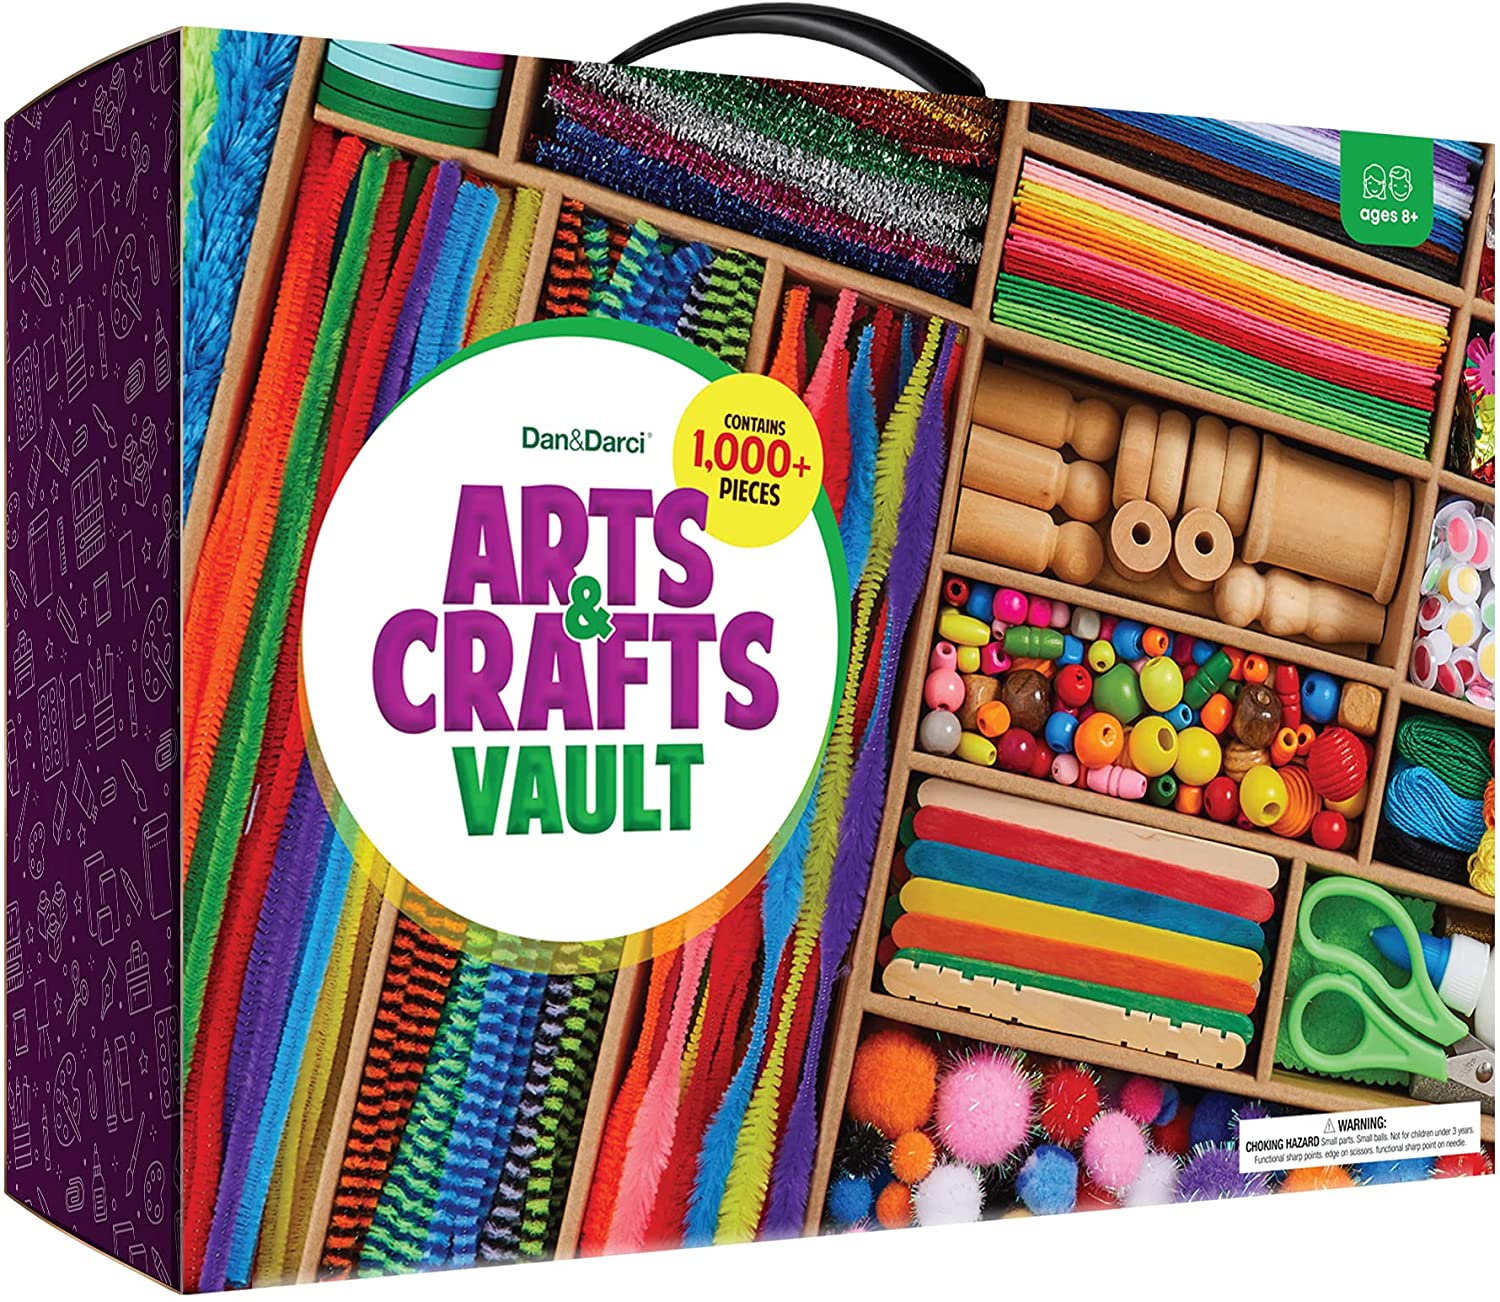 https://www.dontwasteyourmoney.com/wp-content/uploads/2021/12/dandarci-kids-art-craft-supplies-variety-box-1000-piece-craft-supplies.jpg